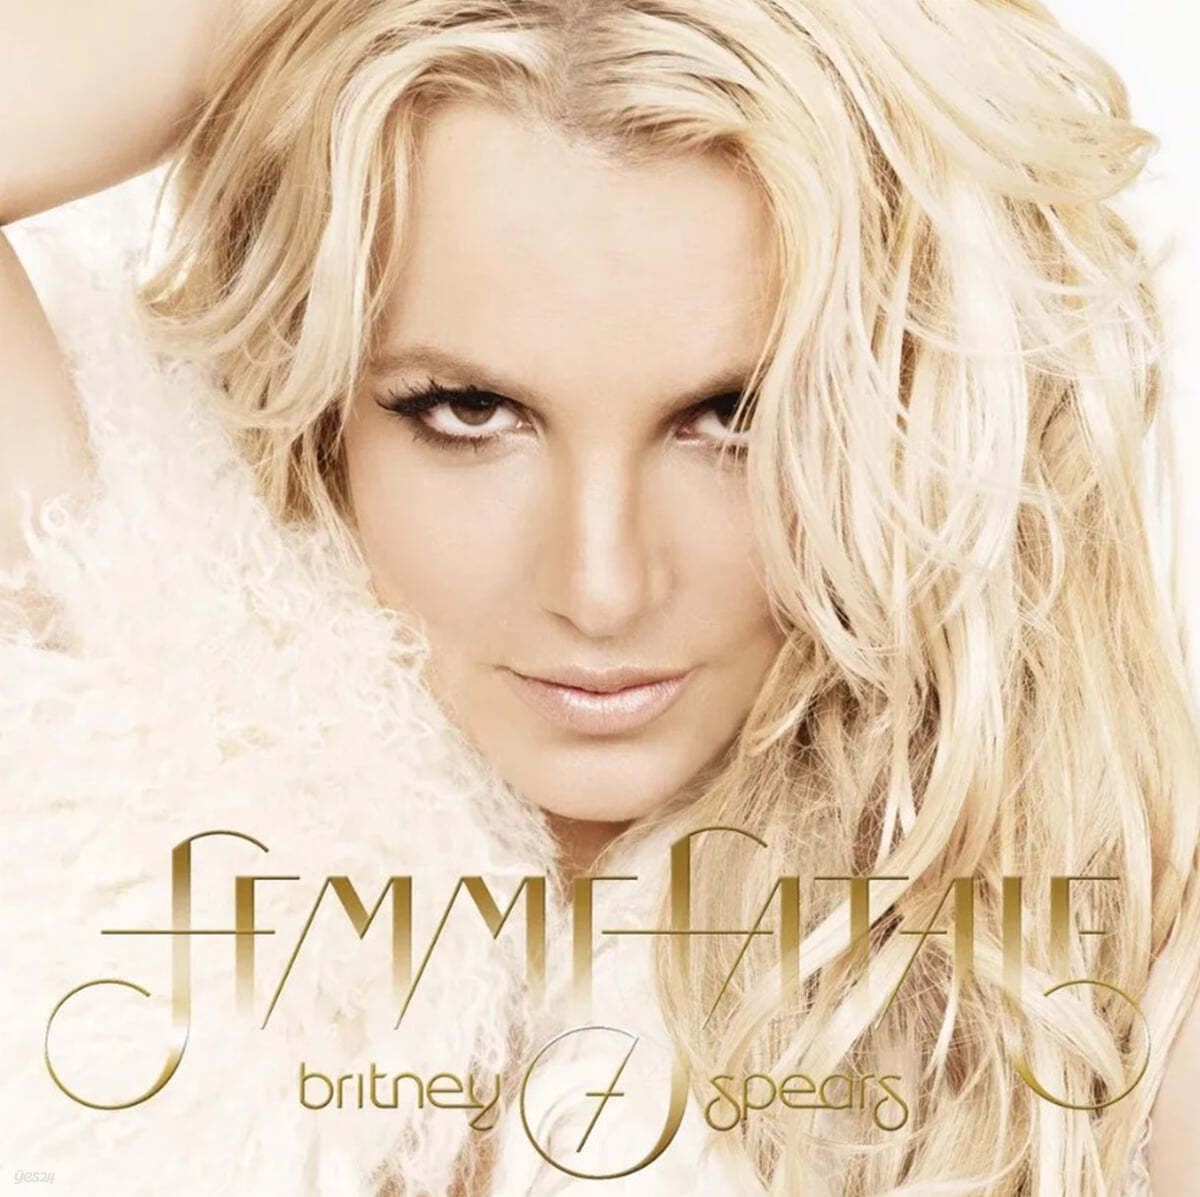 Britney Spears (브리트니 스피어스) - Femme Fatale [그레이 마블 컬러 LP]